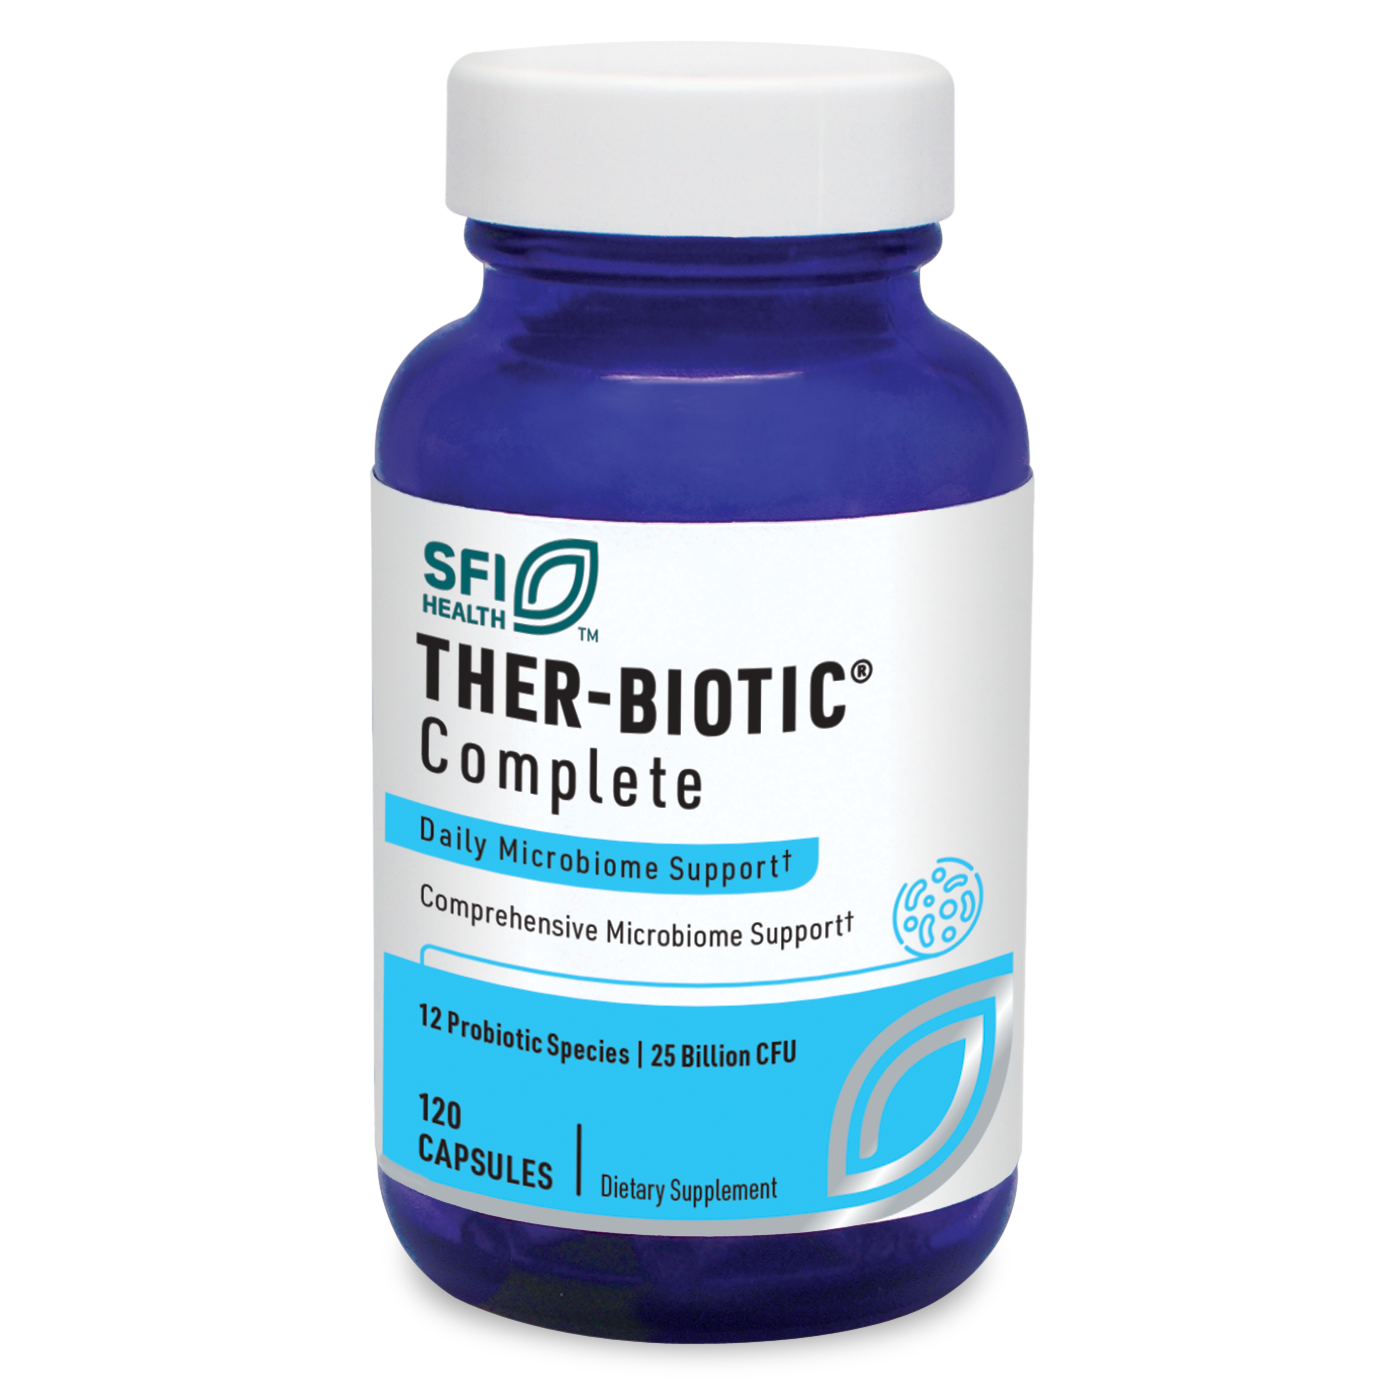 Ther-Biotic Complete capsules 120 ct.